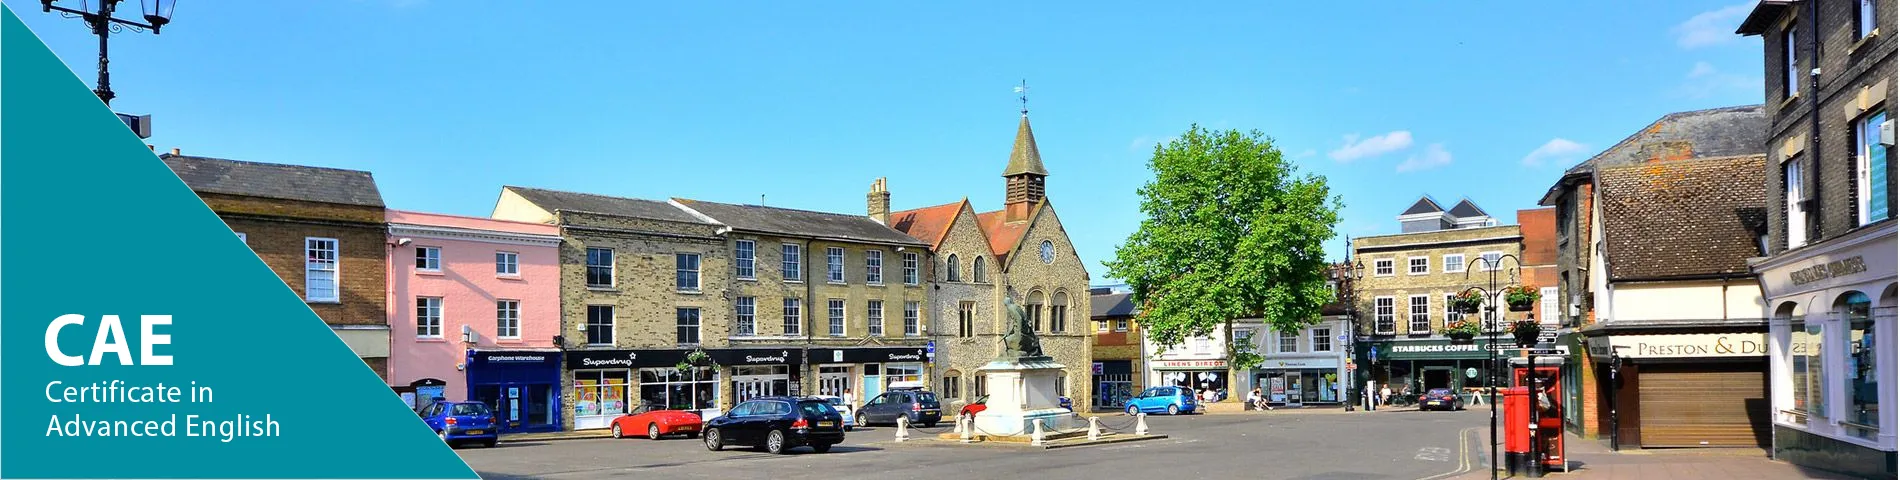 Bury St Edmunds - Certifikát Cambridge Advanced